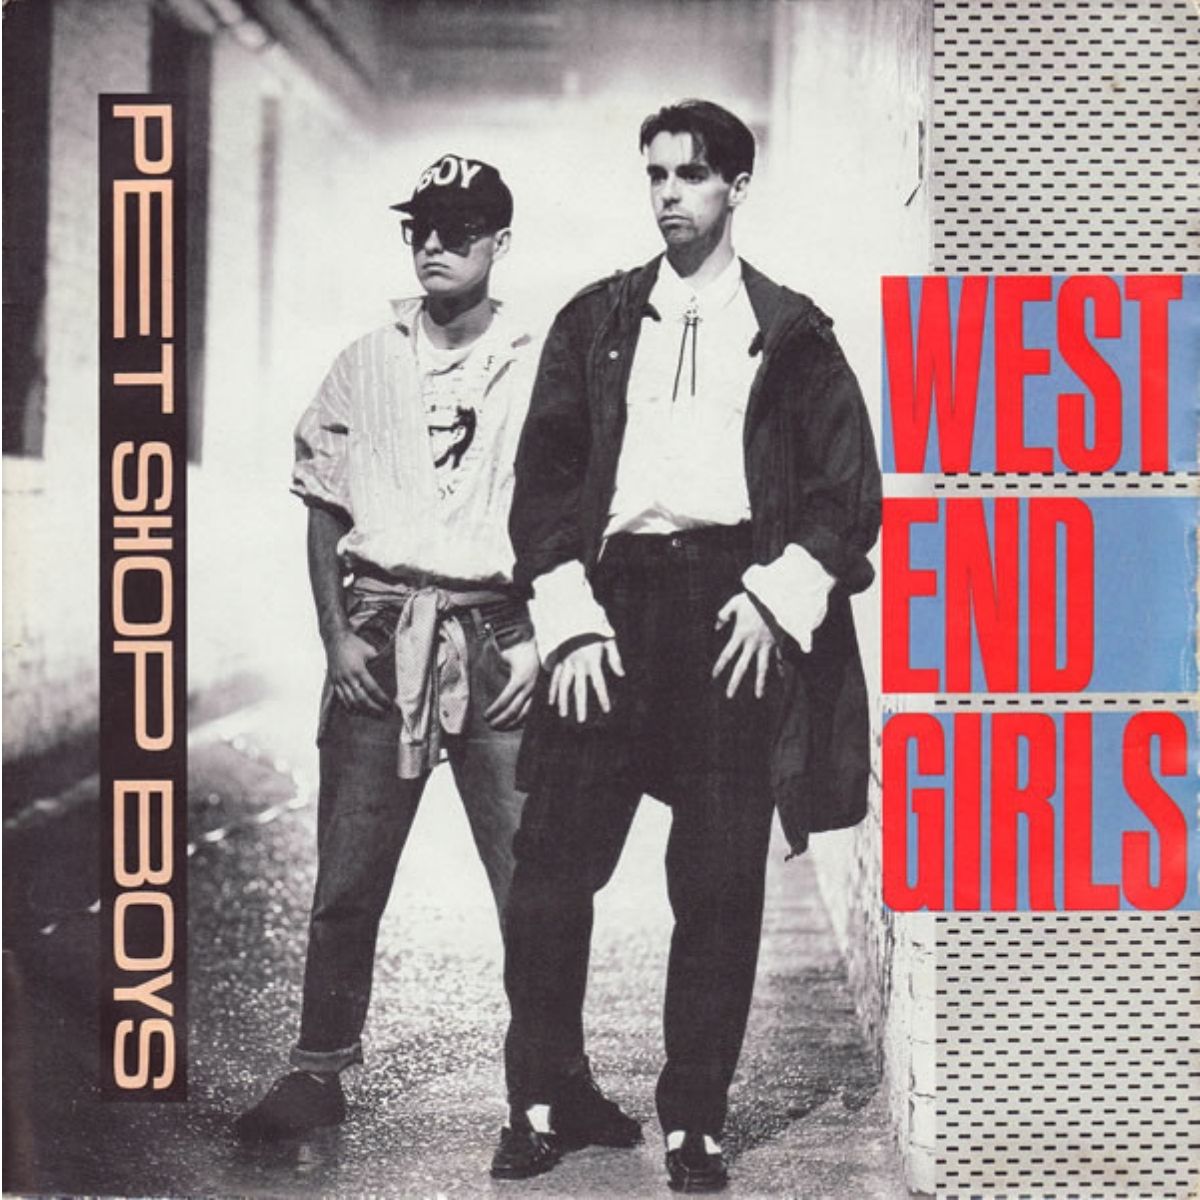 Cover for West End Girls single "Pet Shop Boys"